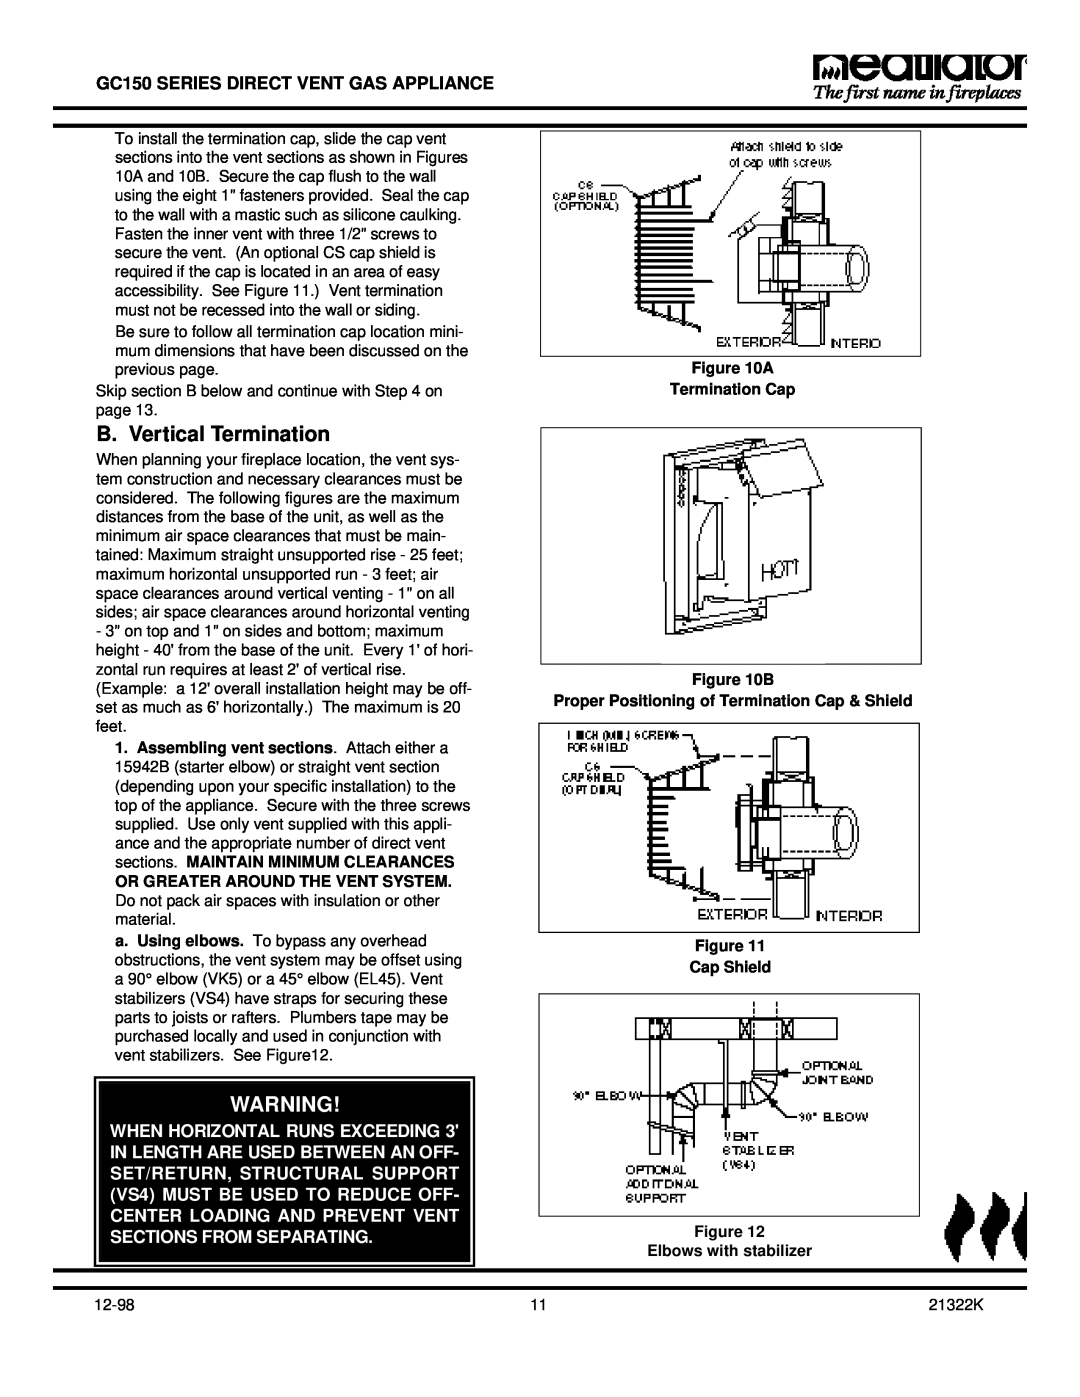 Heatiator owner manual B. Vertical Termination, GC150 SERIES DIRECT VENT GAS APPLIANCE, A Termination Cap B 